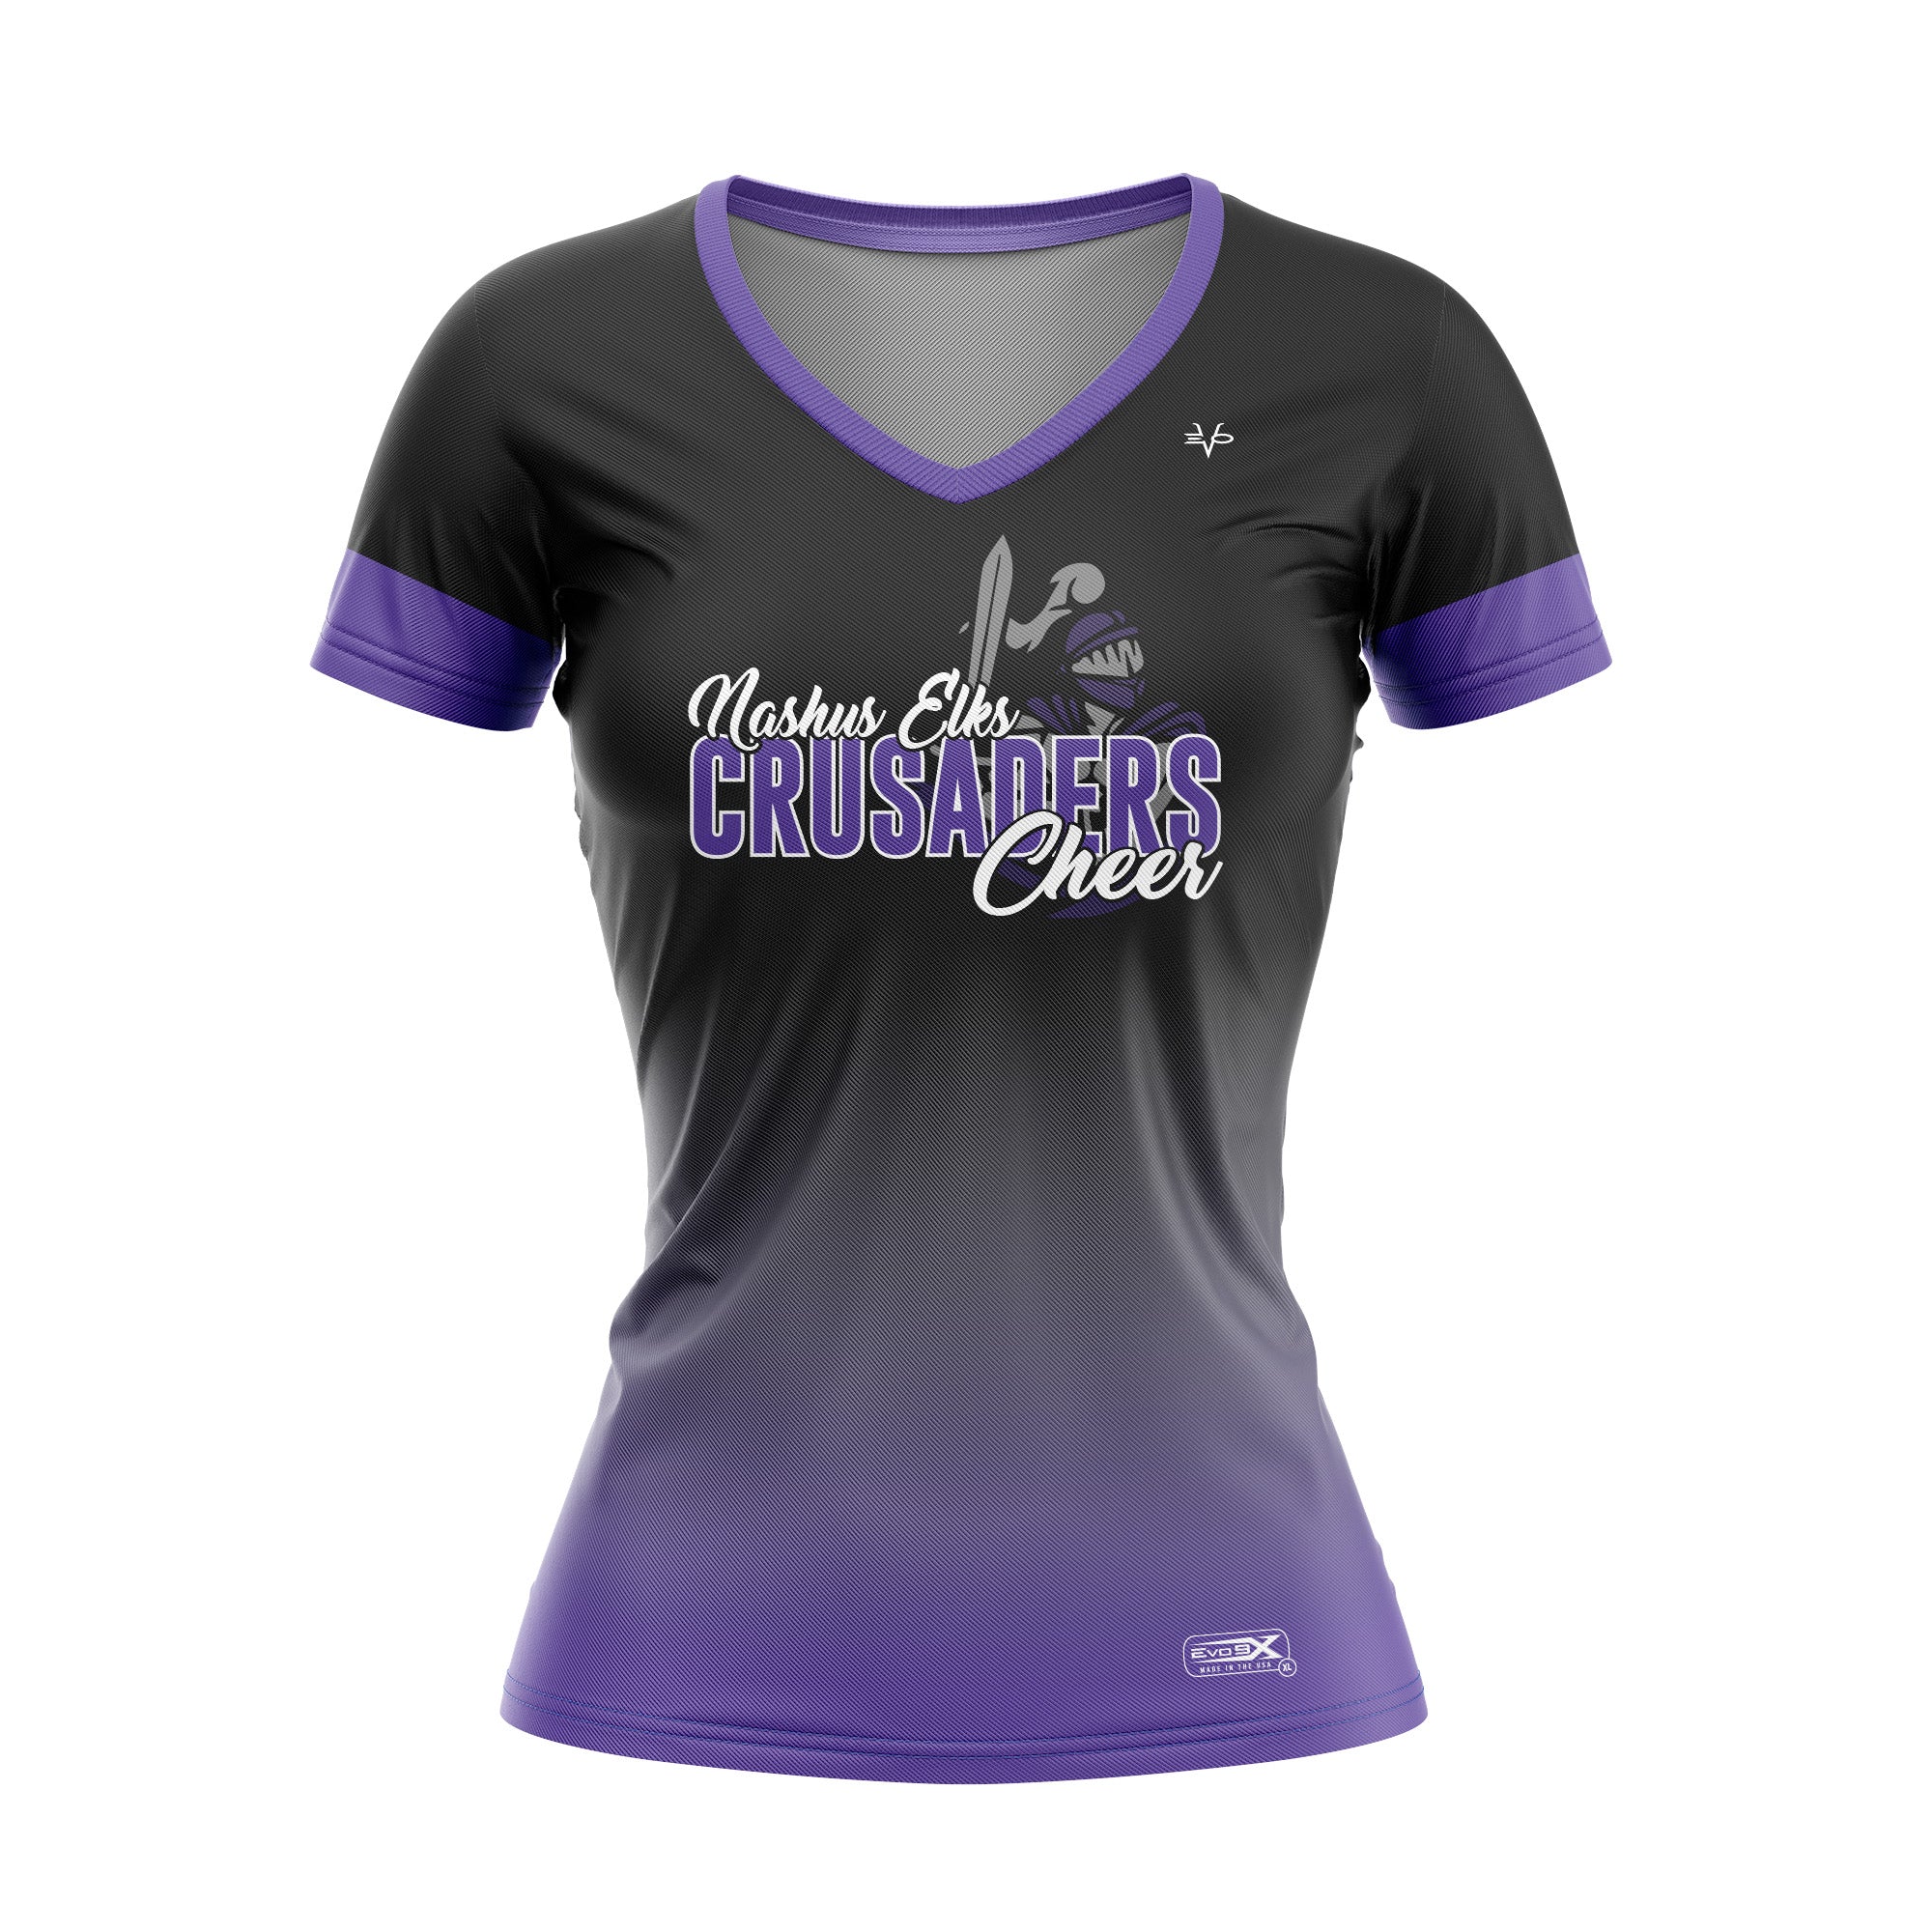 Nashua Elks Crusaders Cheer Women's V-Neck T-Shirt